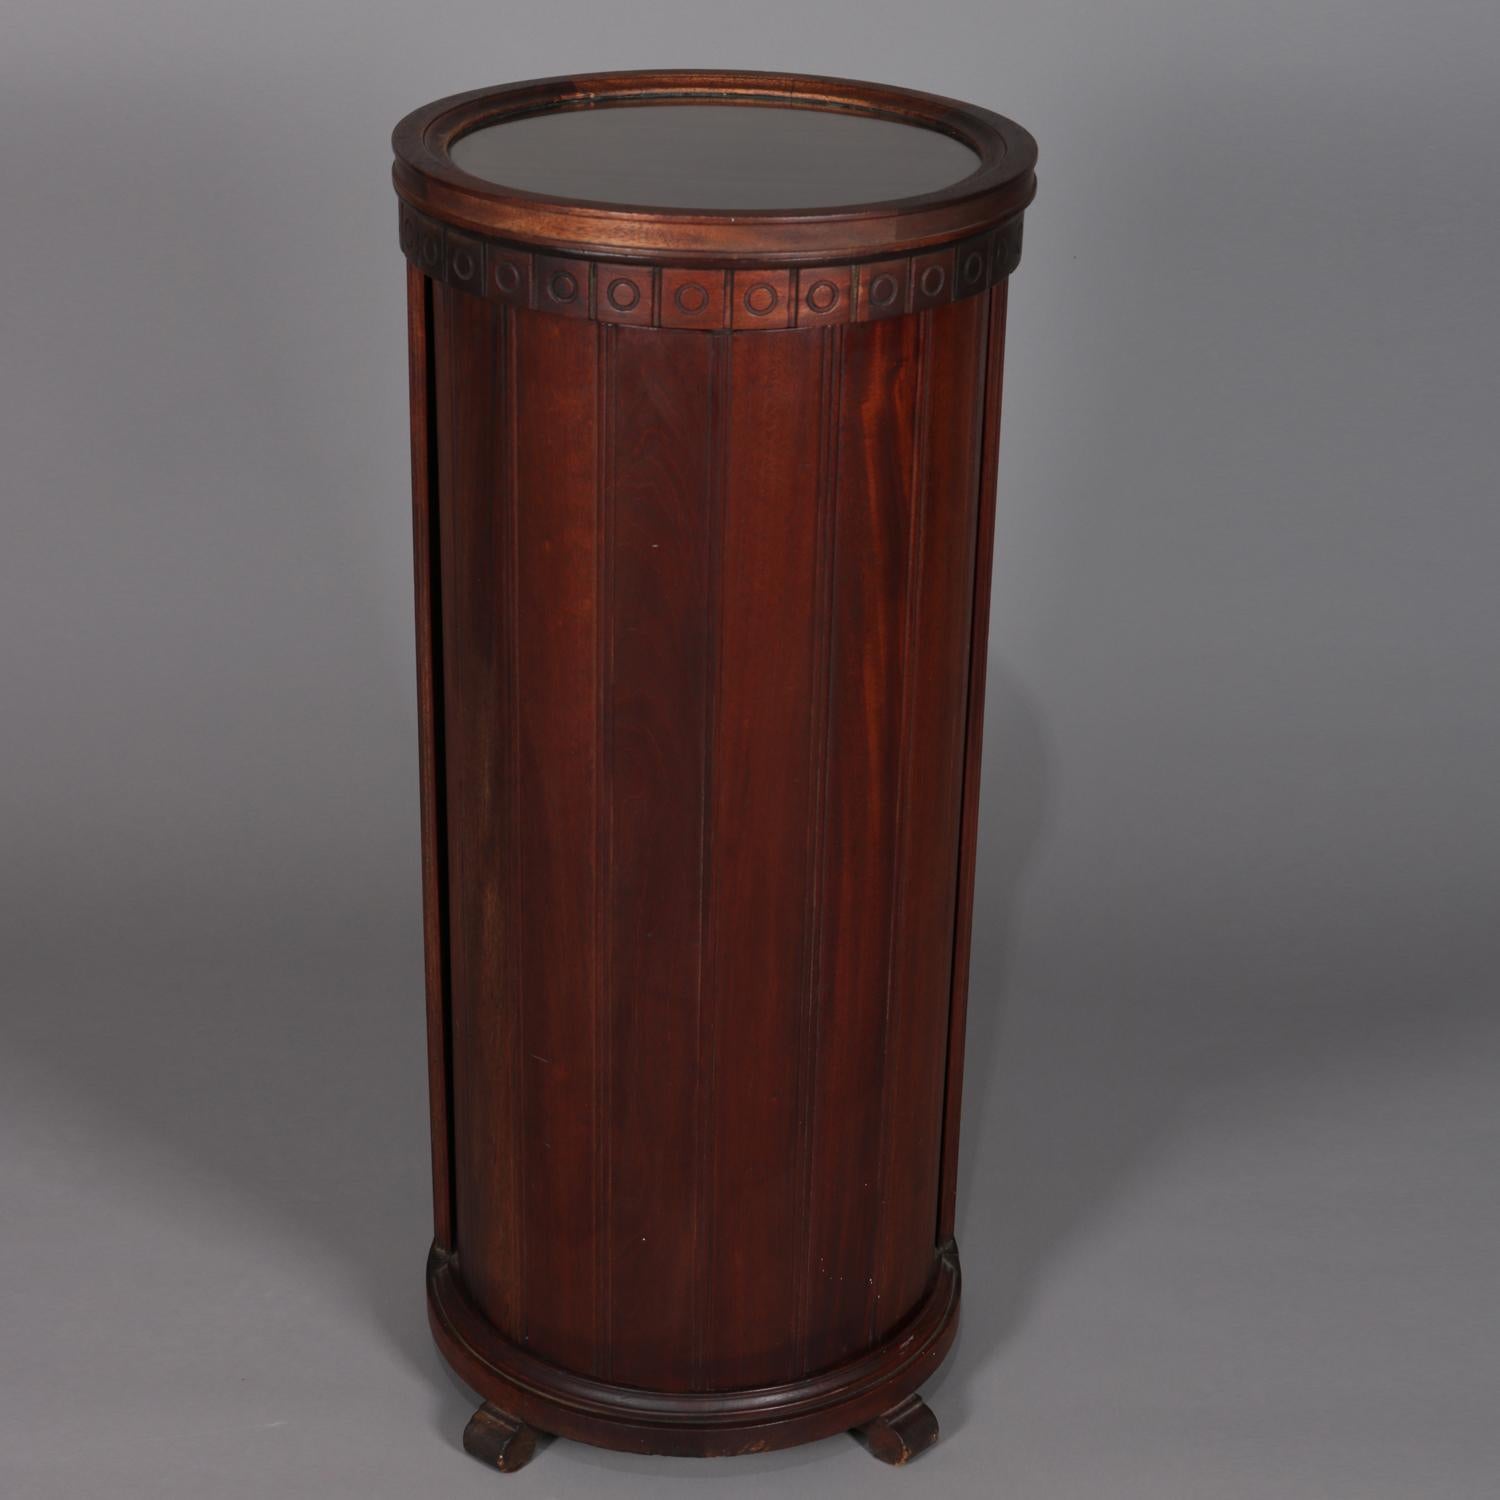 Antique English Mahogany Column Form Liquor Cellarette and Display Pedestal 1